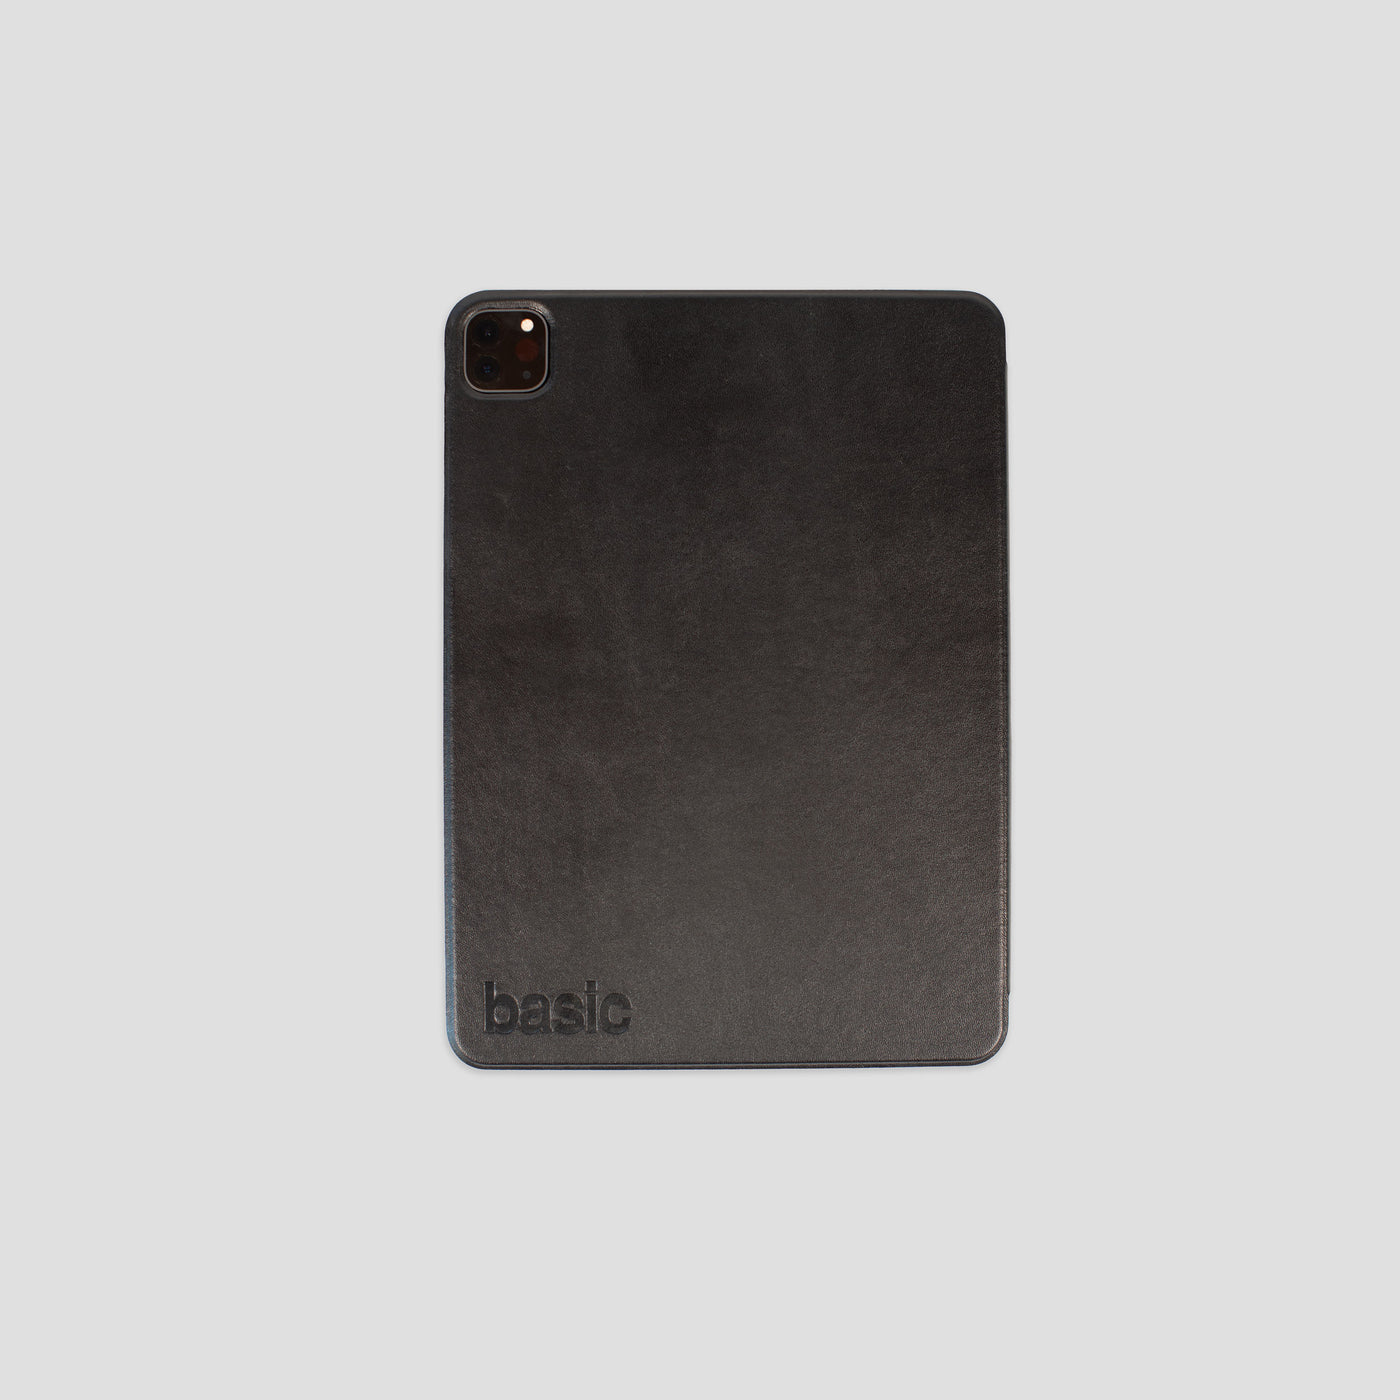 iPad Covers and Folio Cases